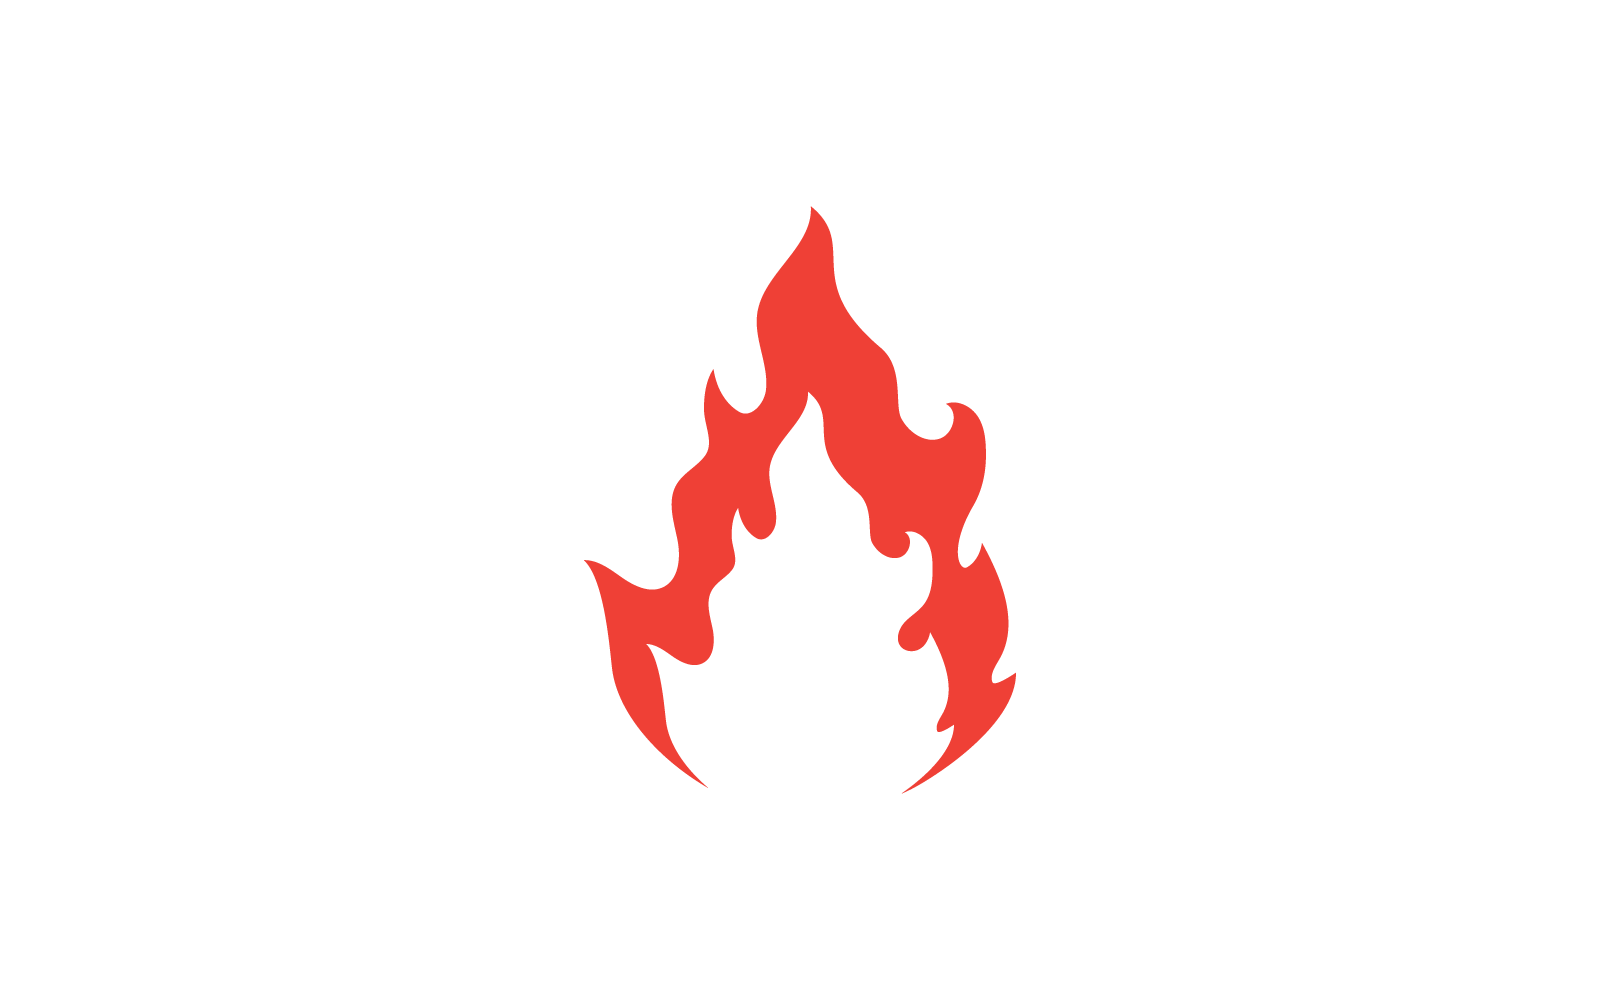 Fire flame Logo vector, Oil, gas and energy logo flat design